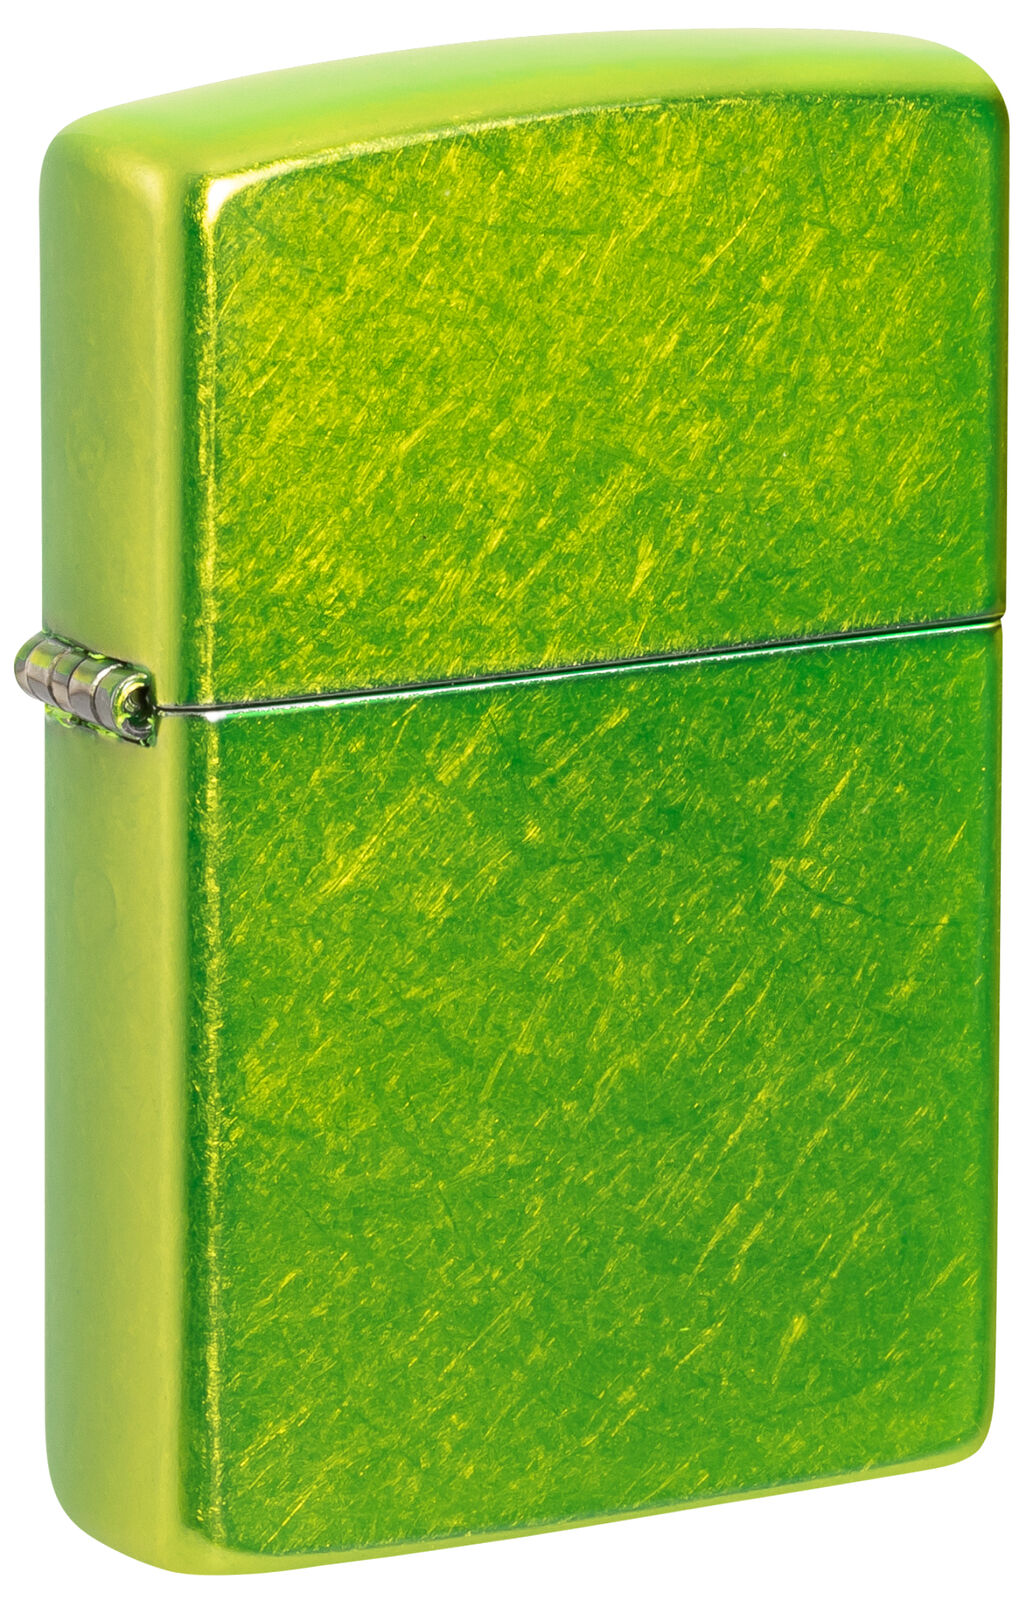 Zippo Classic Lurid Windproof Lighter, 24513